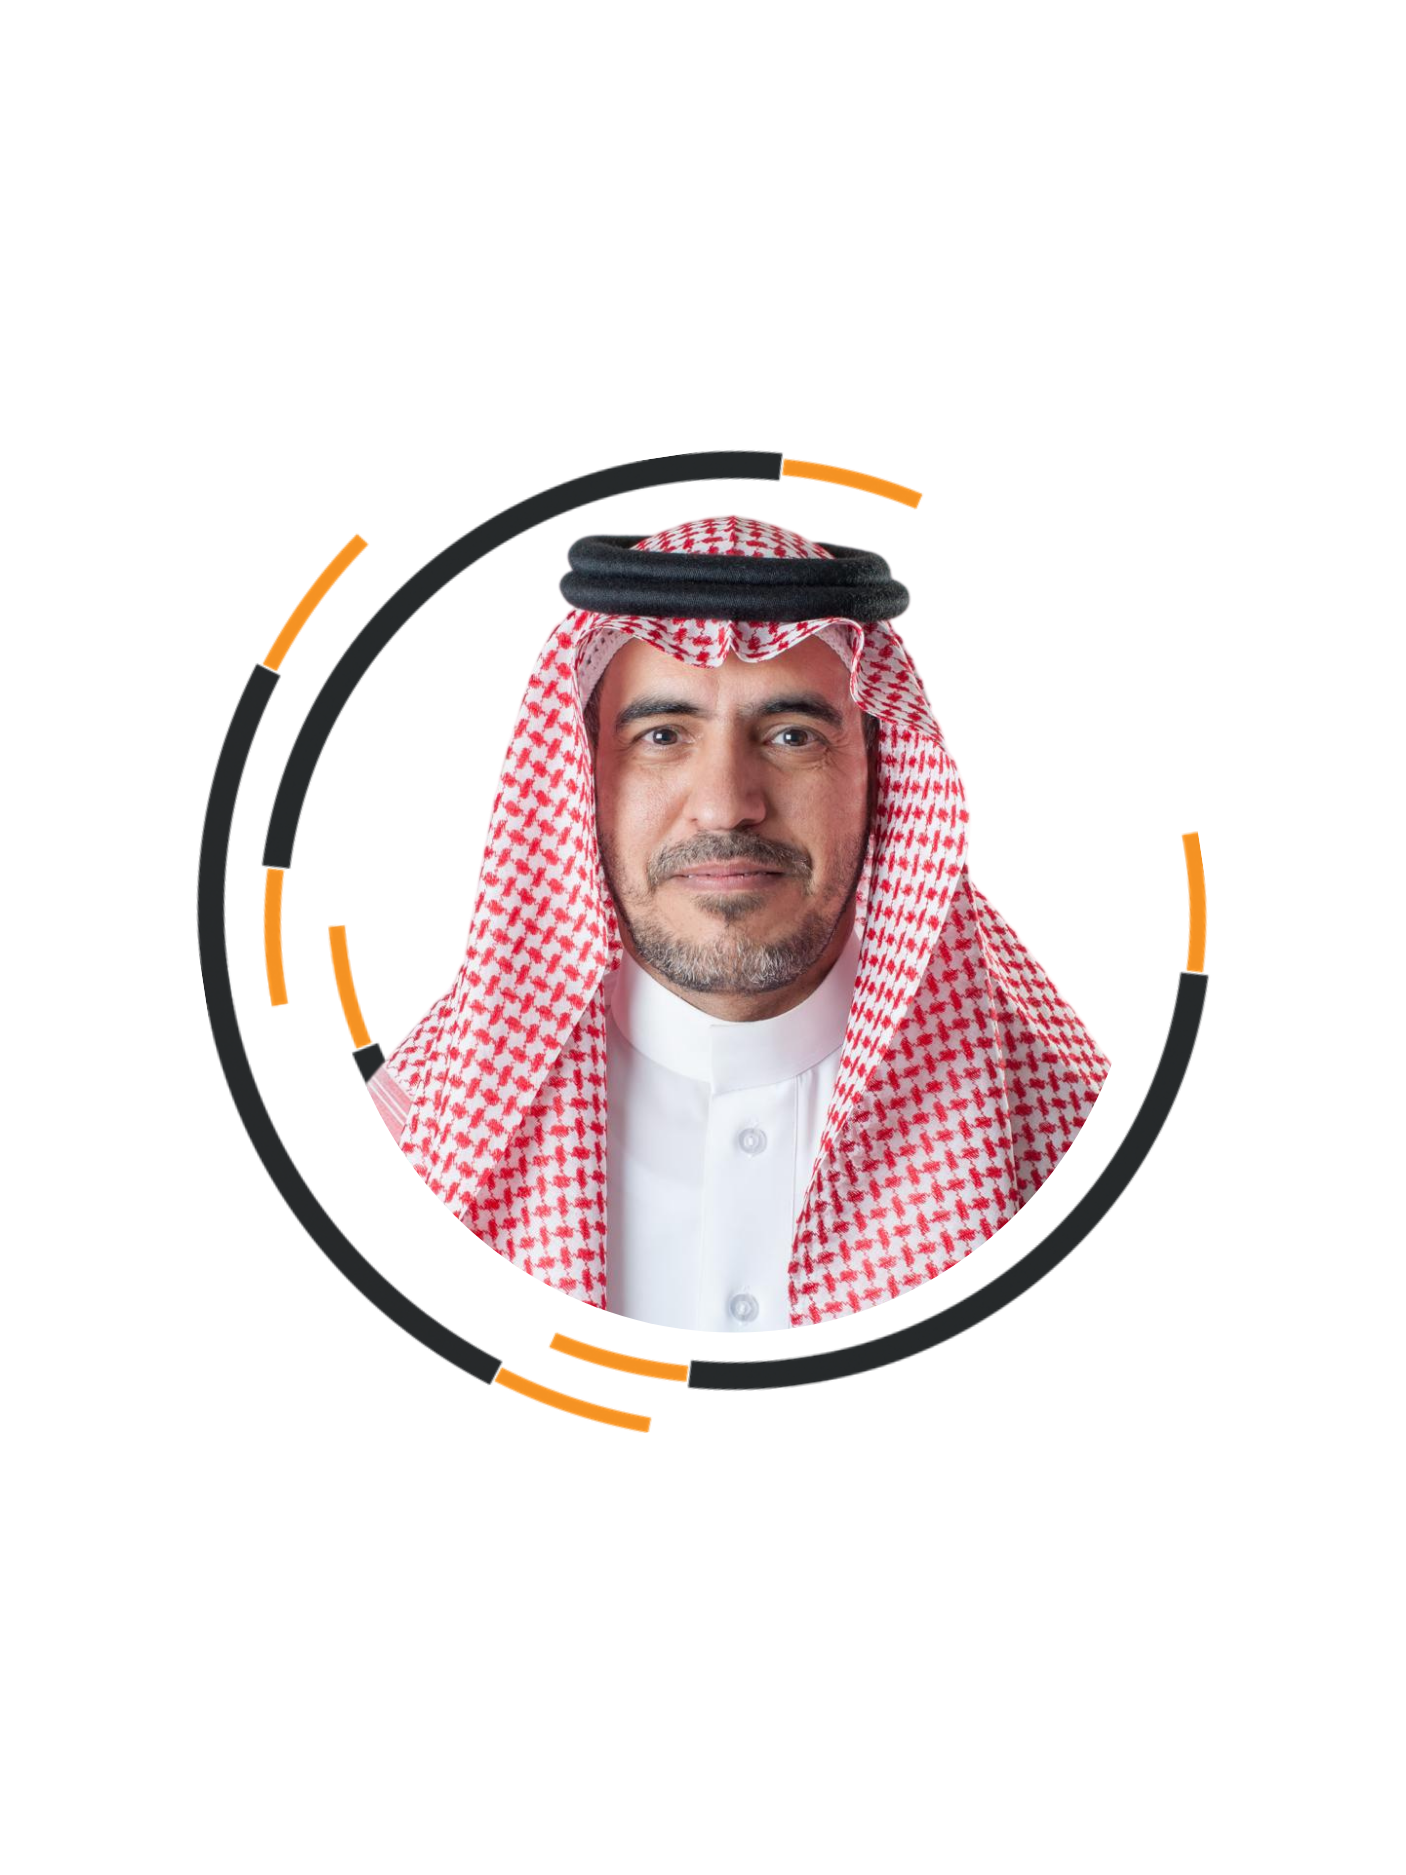 Mr. Abdulkarim bin Muhammad Al-Nahir